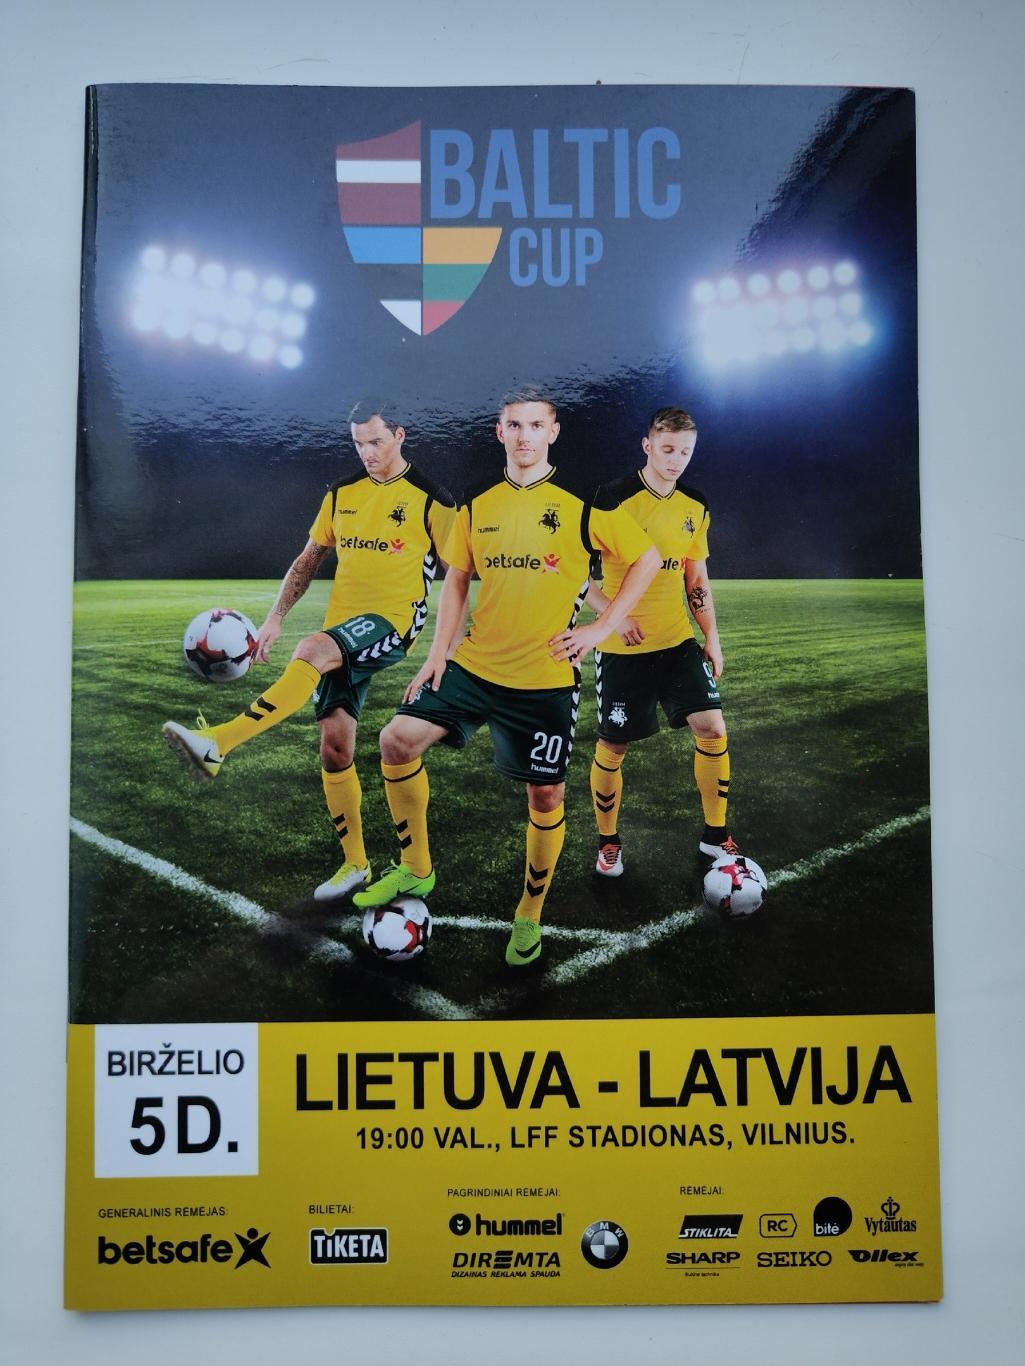 Вильнюс. Литва - Латвия 2018 Кубок Балтии